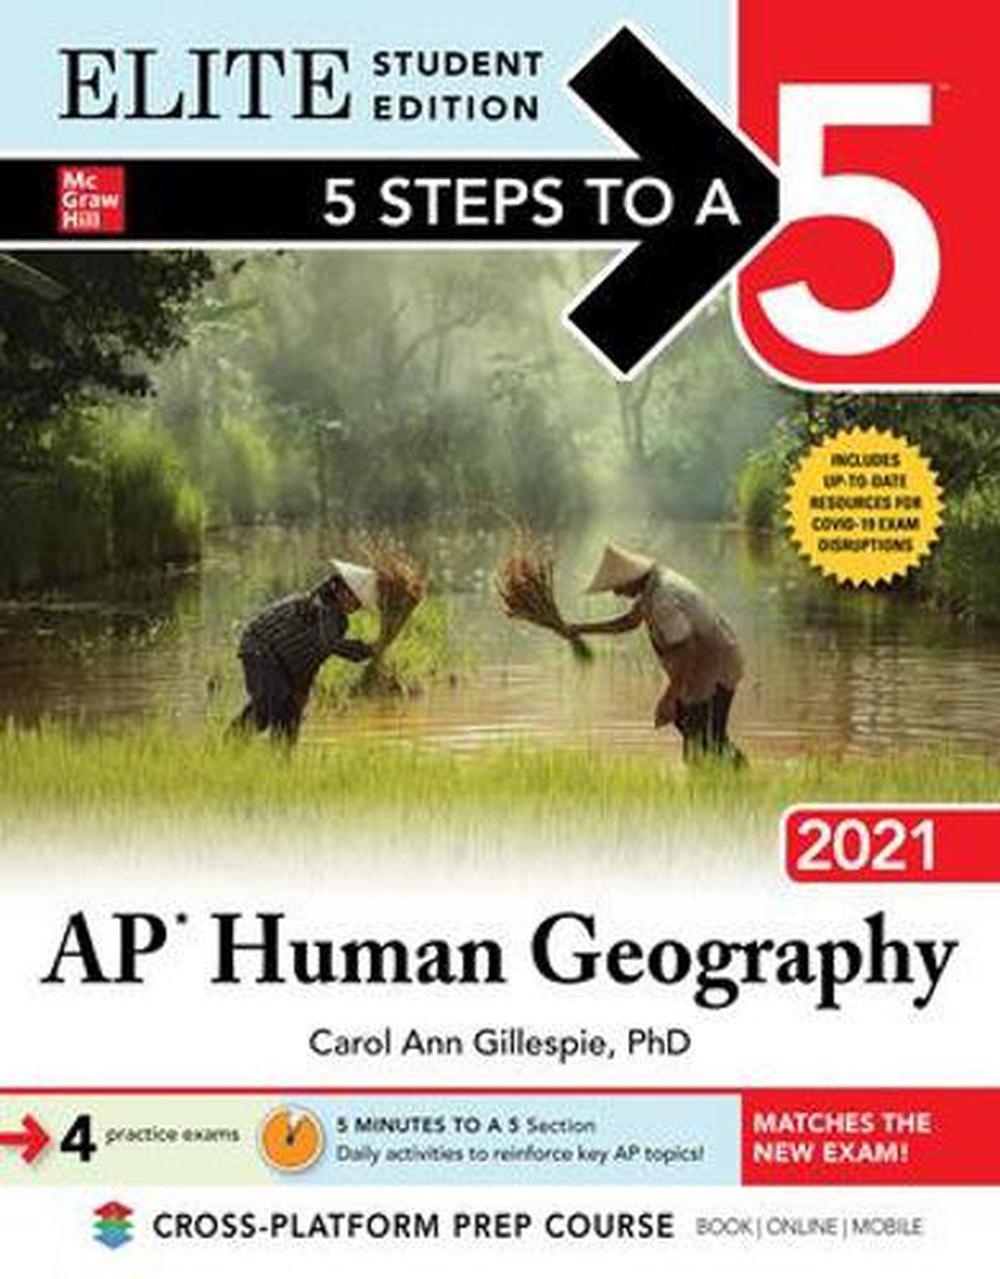 ap human geography essay topics